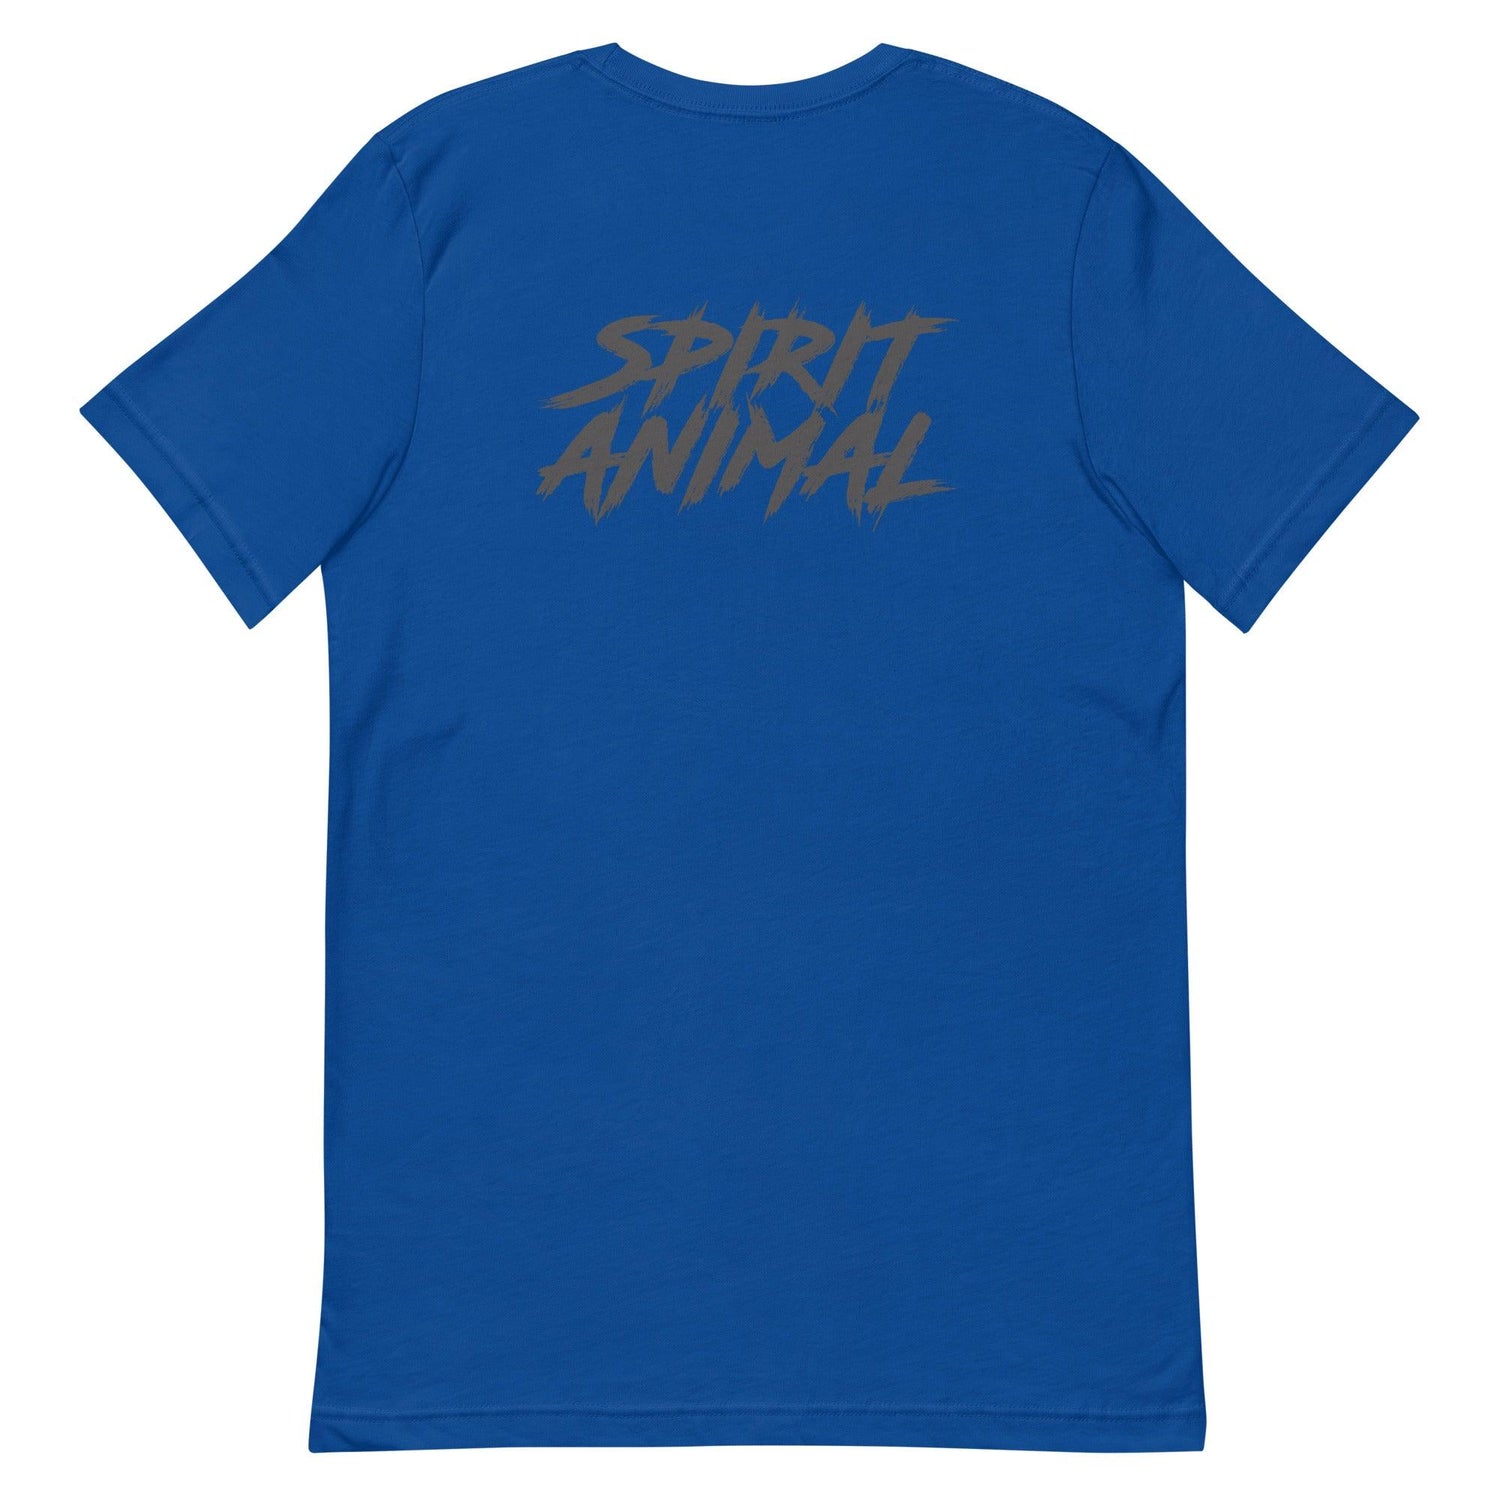 Scooby Wright III “SharkDawg” T-Shirt - Fan Arch